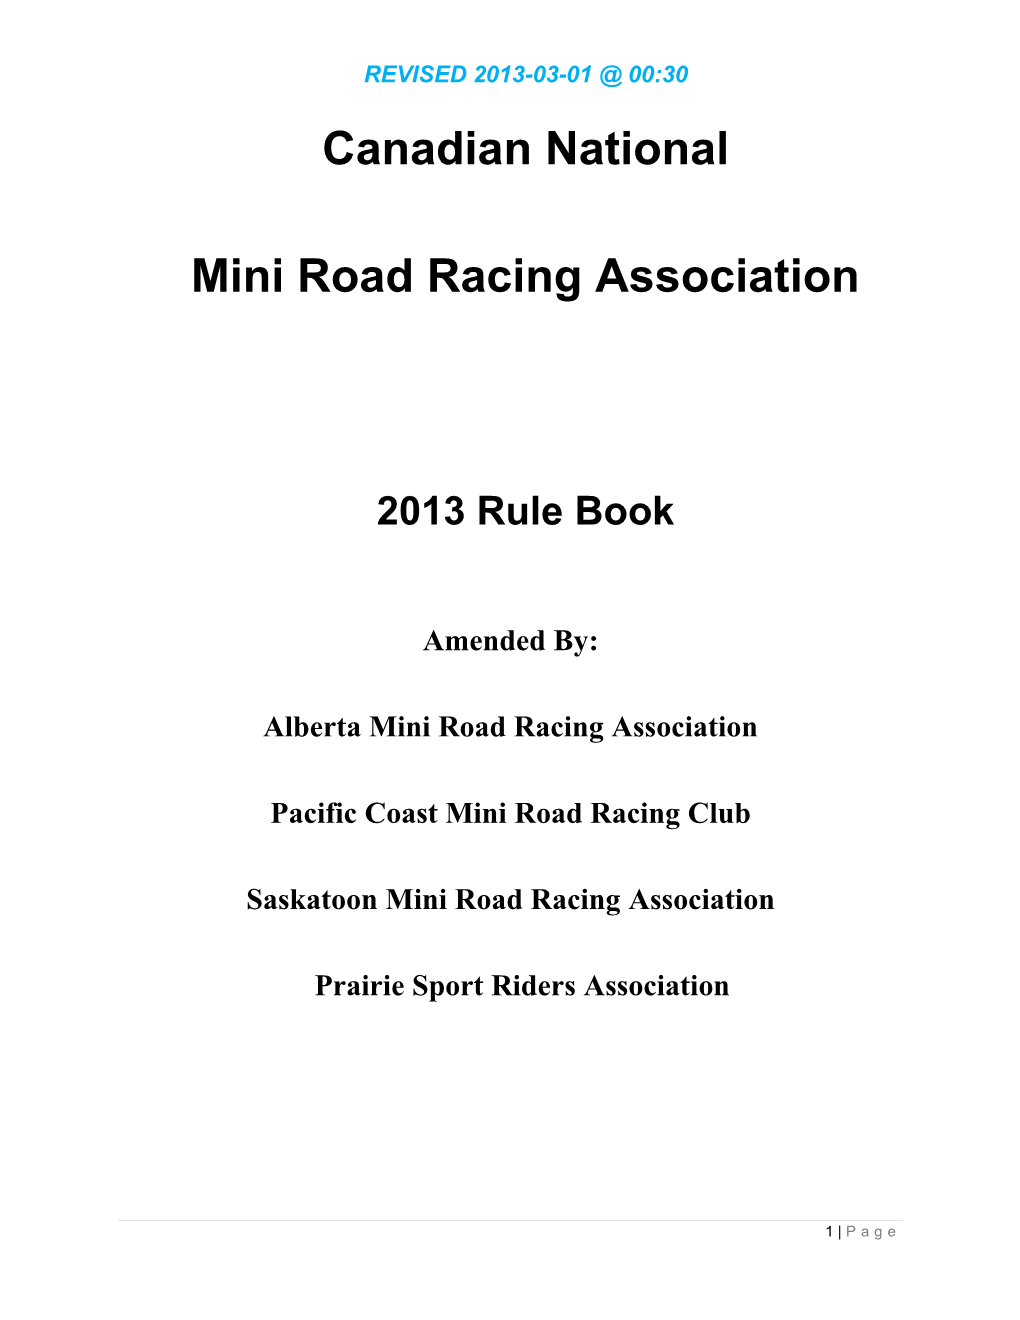 Canadian National Mini Road Racing Association